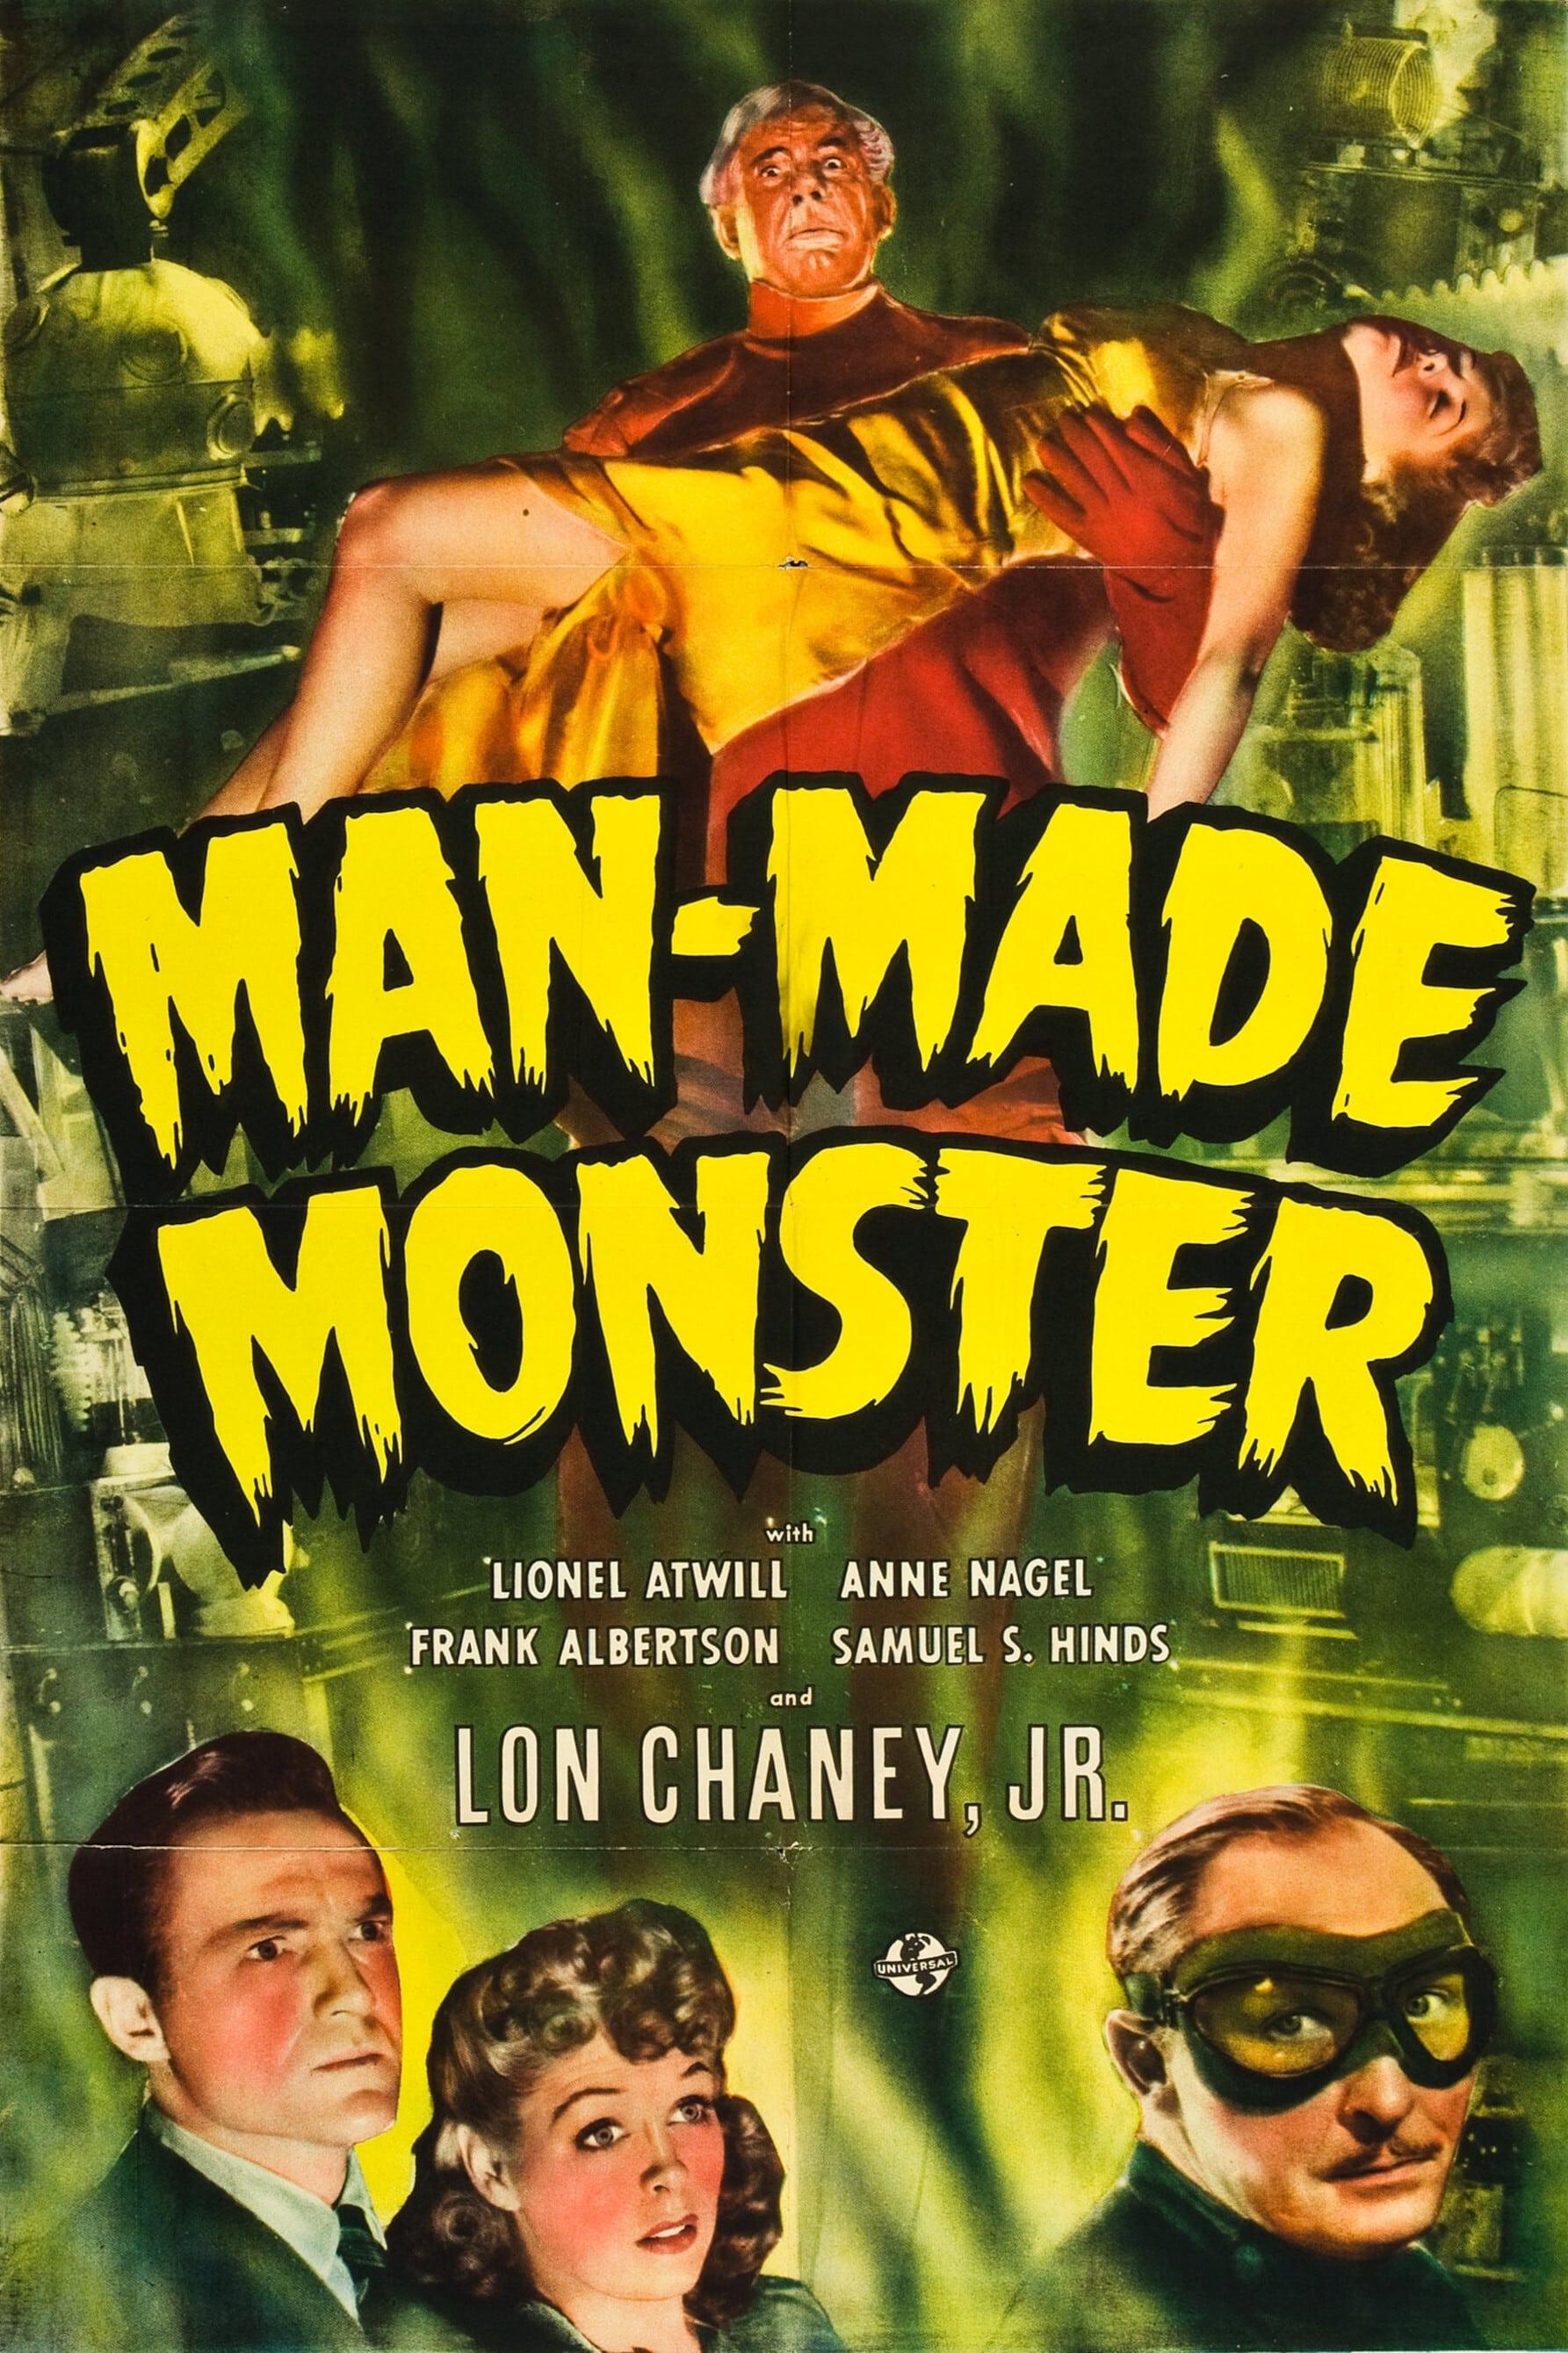 Man-Made Monster poster